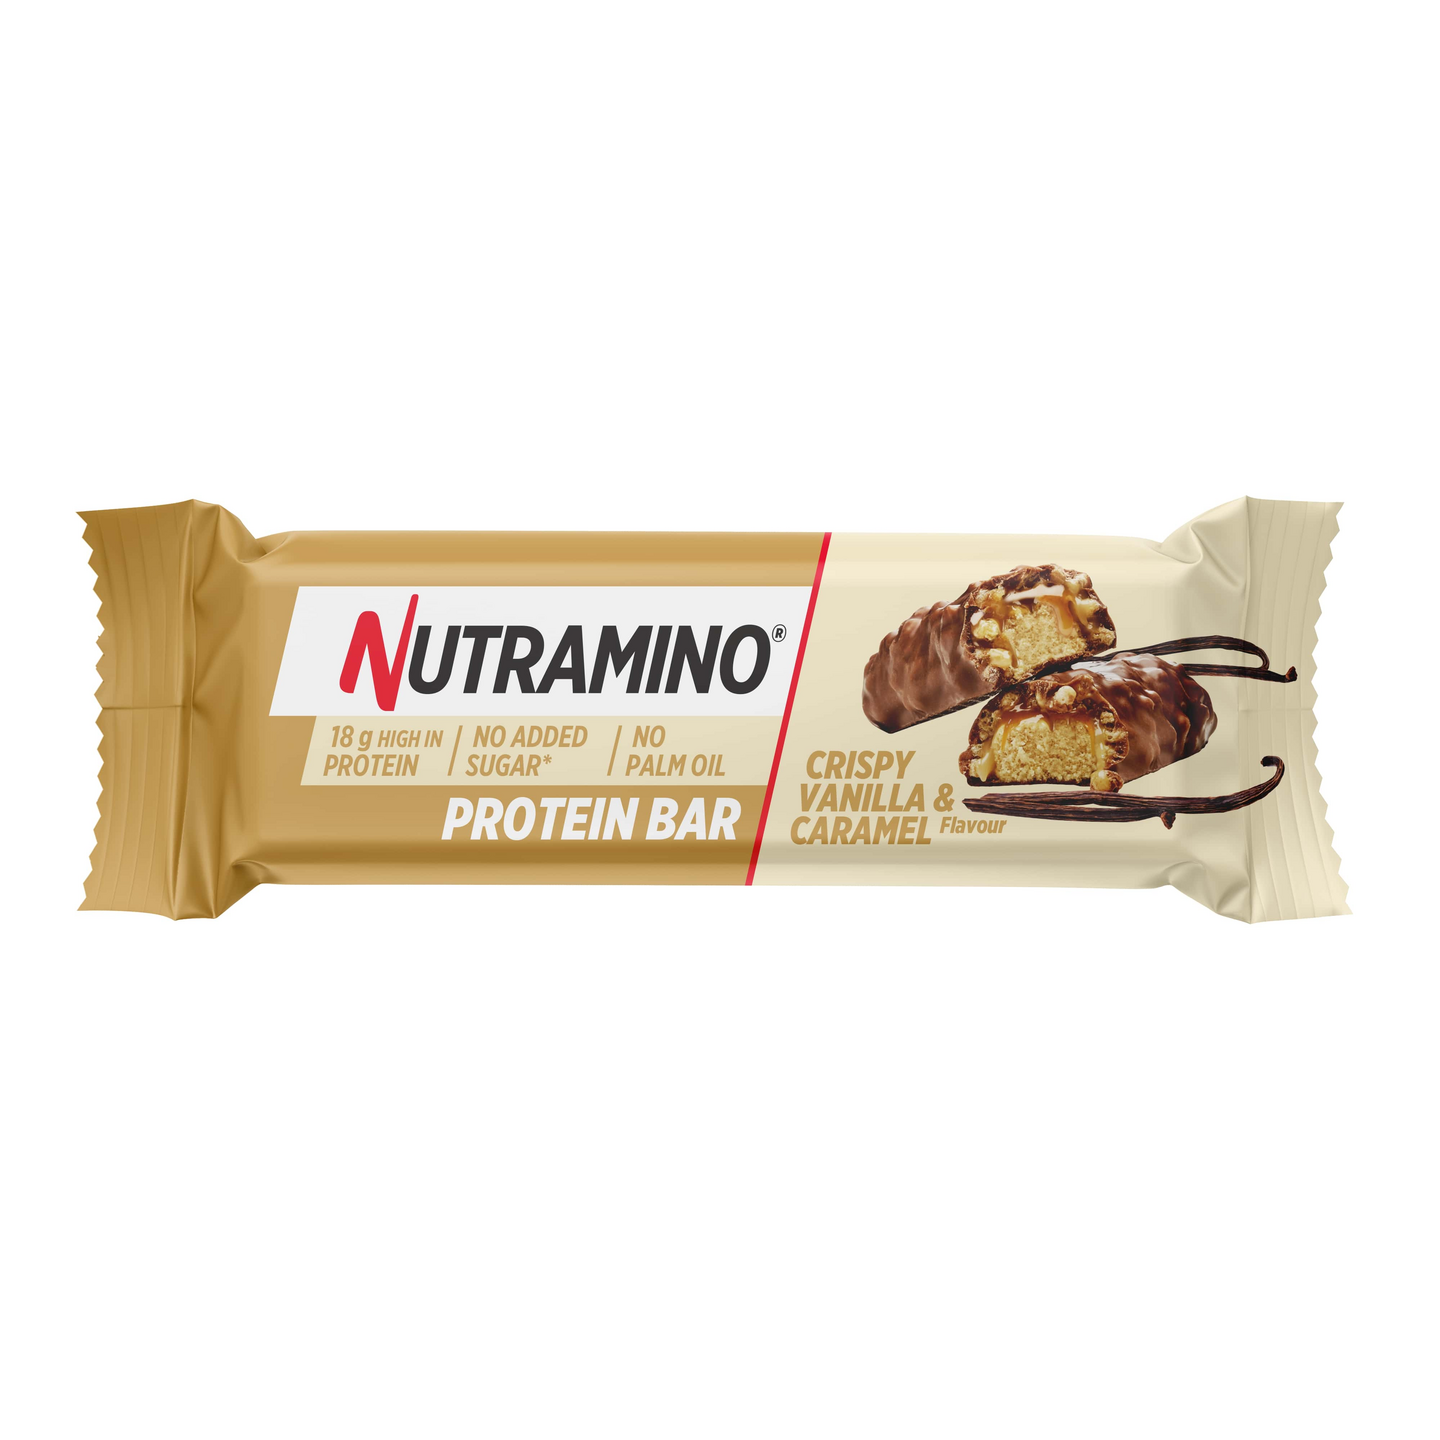 Nutramino proteiinipatukka Crispy Vanilla & Caramel 55g